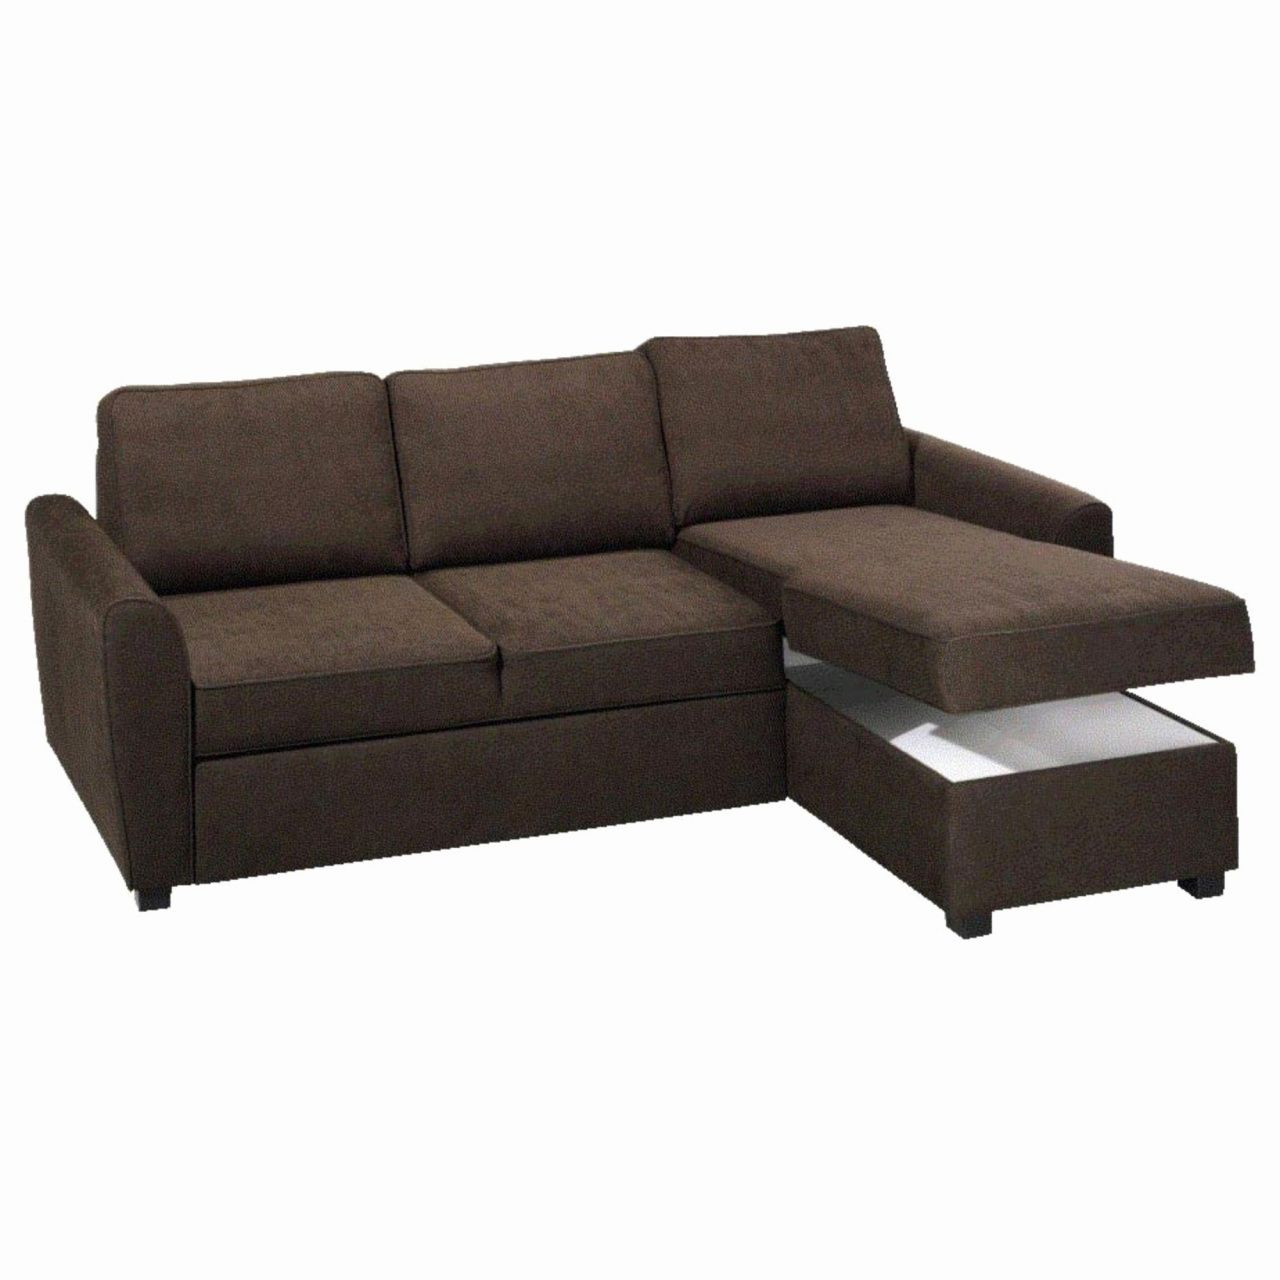 55 Fauteuil Convertible 1 Place Ikea | Furniture, Couch ... pour Fauteuil Convertible 1 Place Ikea